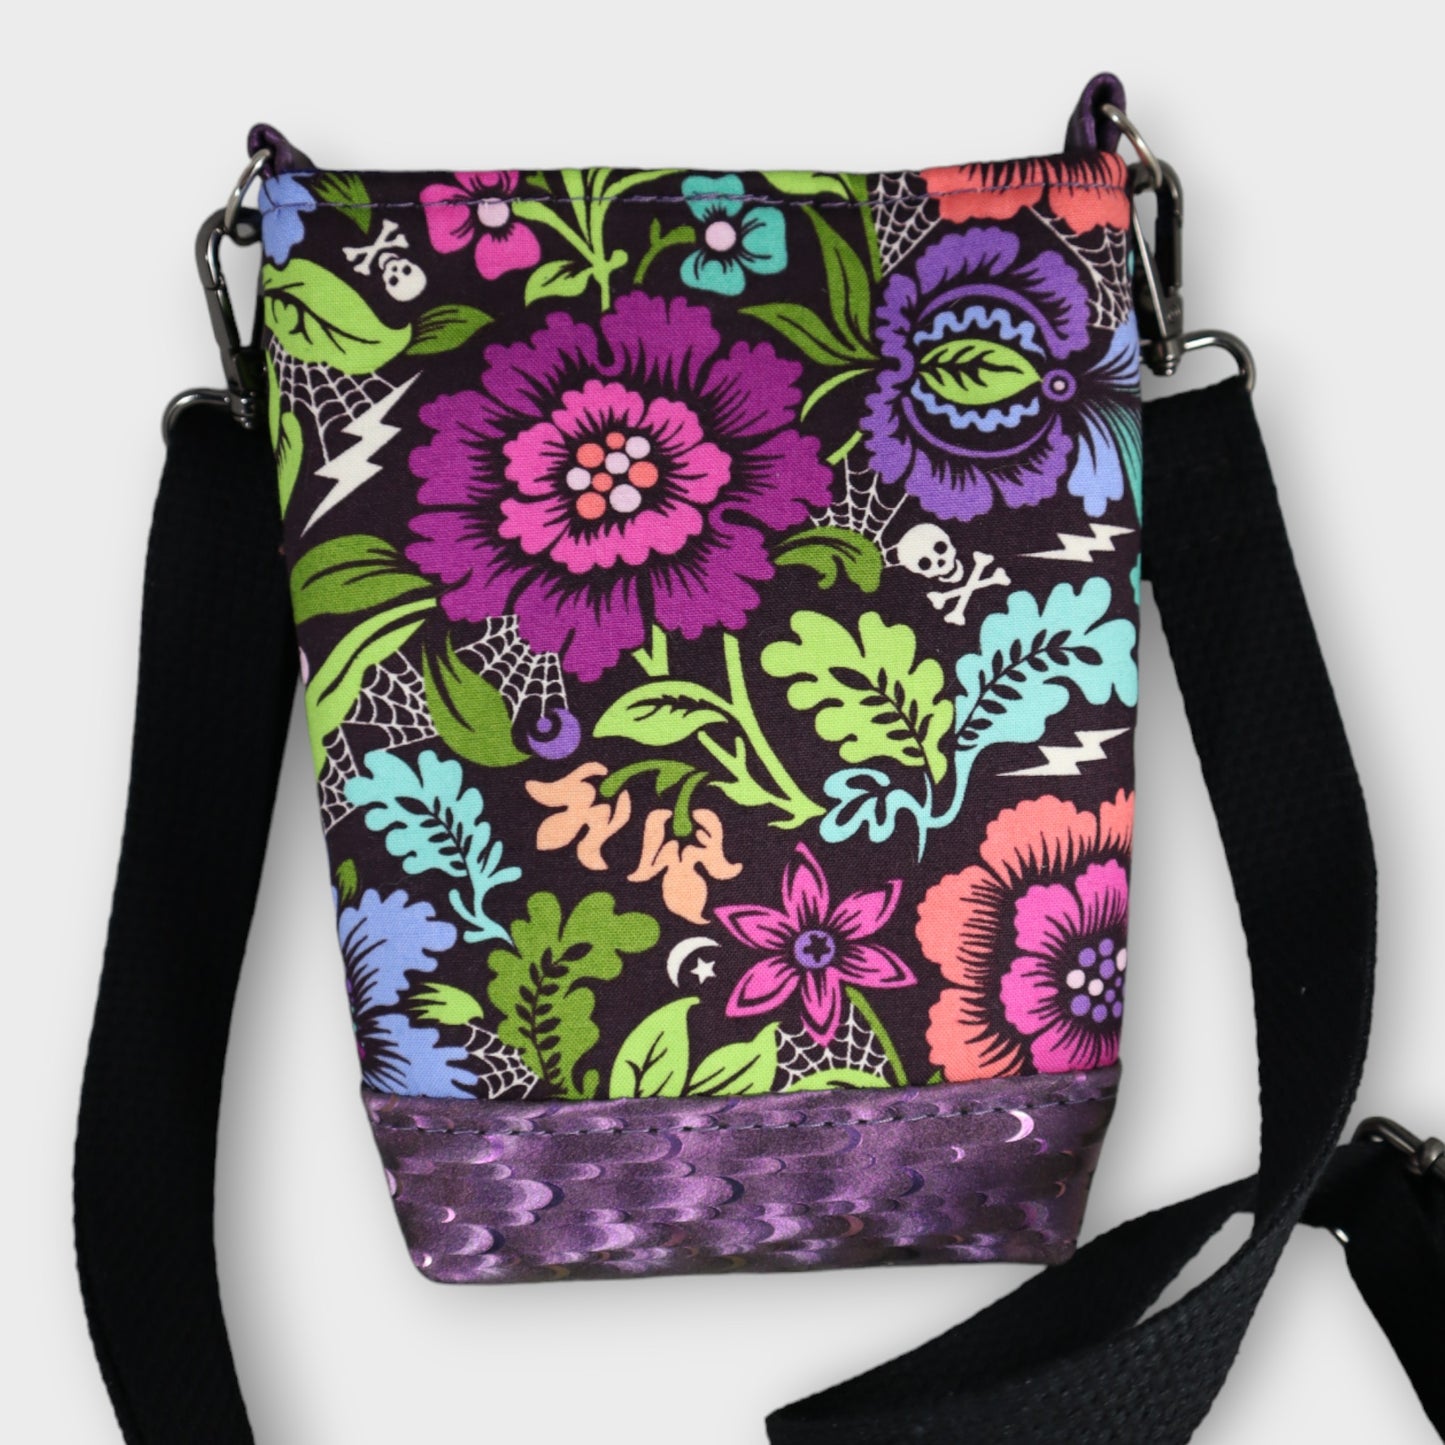 Handcrafted bag handbag small cell phone purse floral skulls